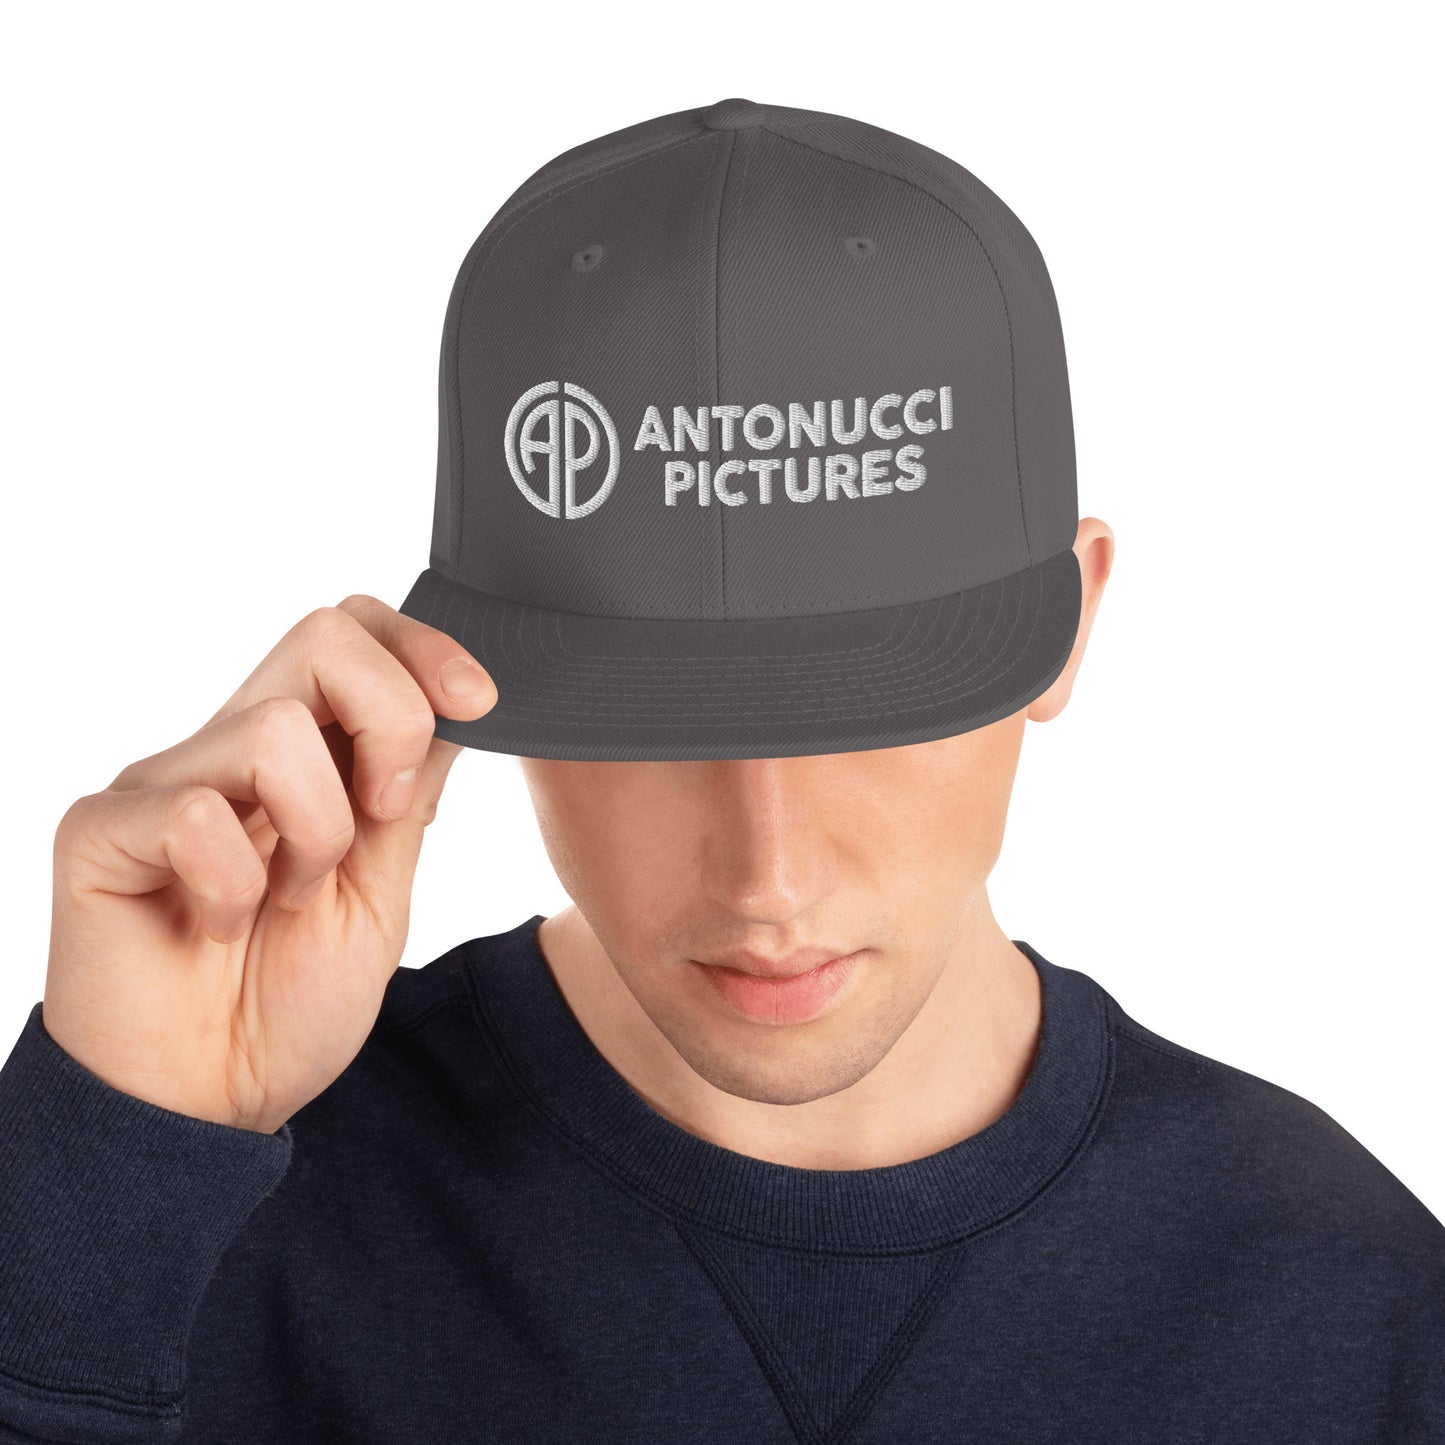 Antonucci Pictures Snapback Hat